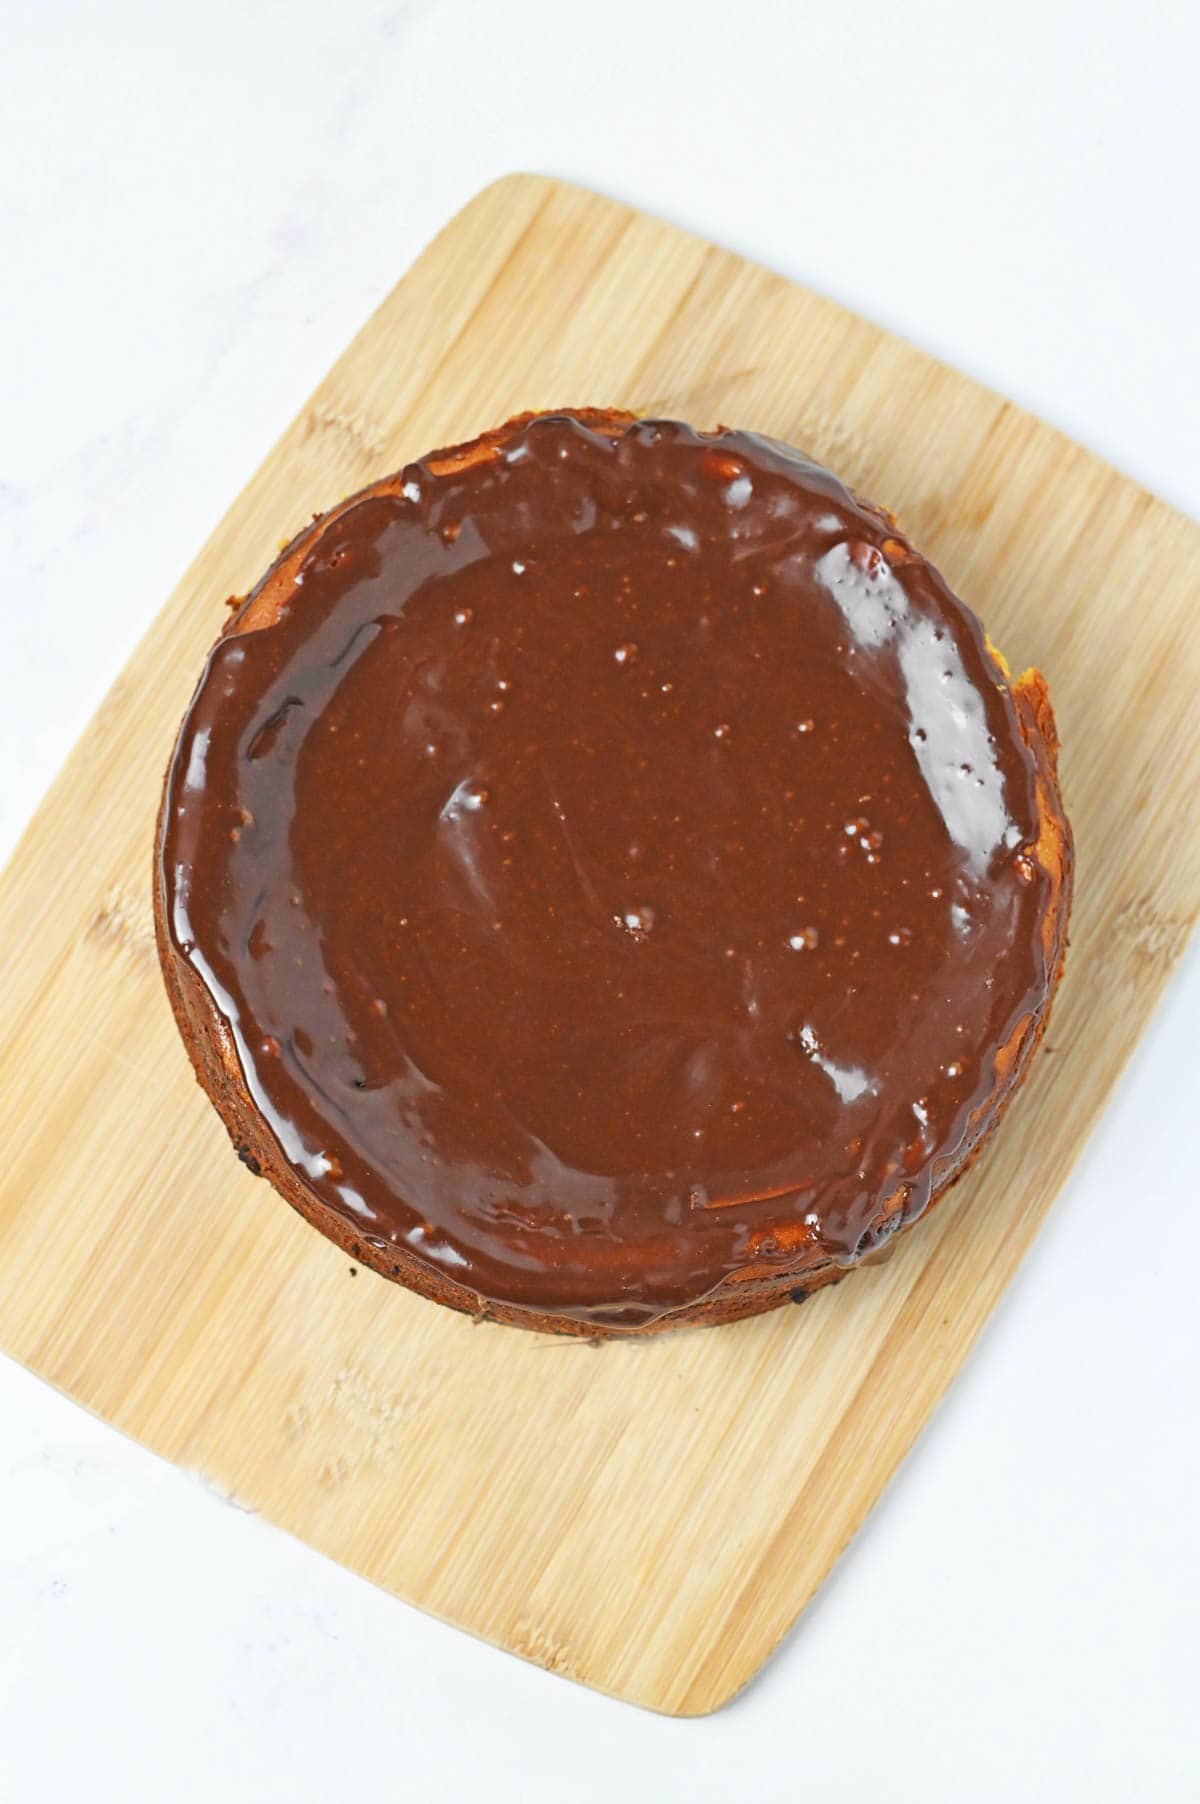 Cheesecake covered in chocolate ganache